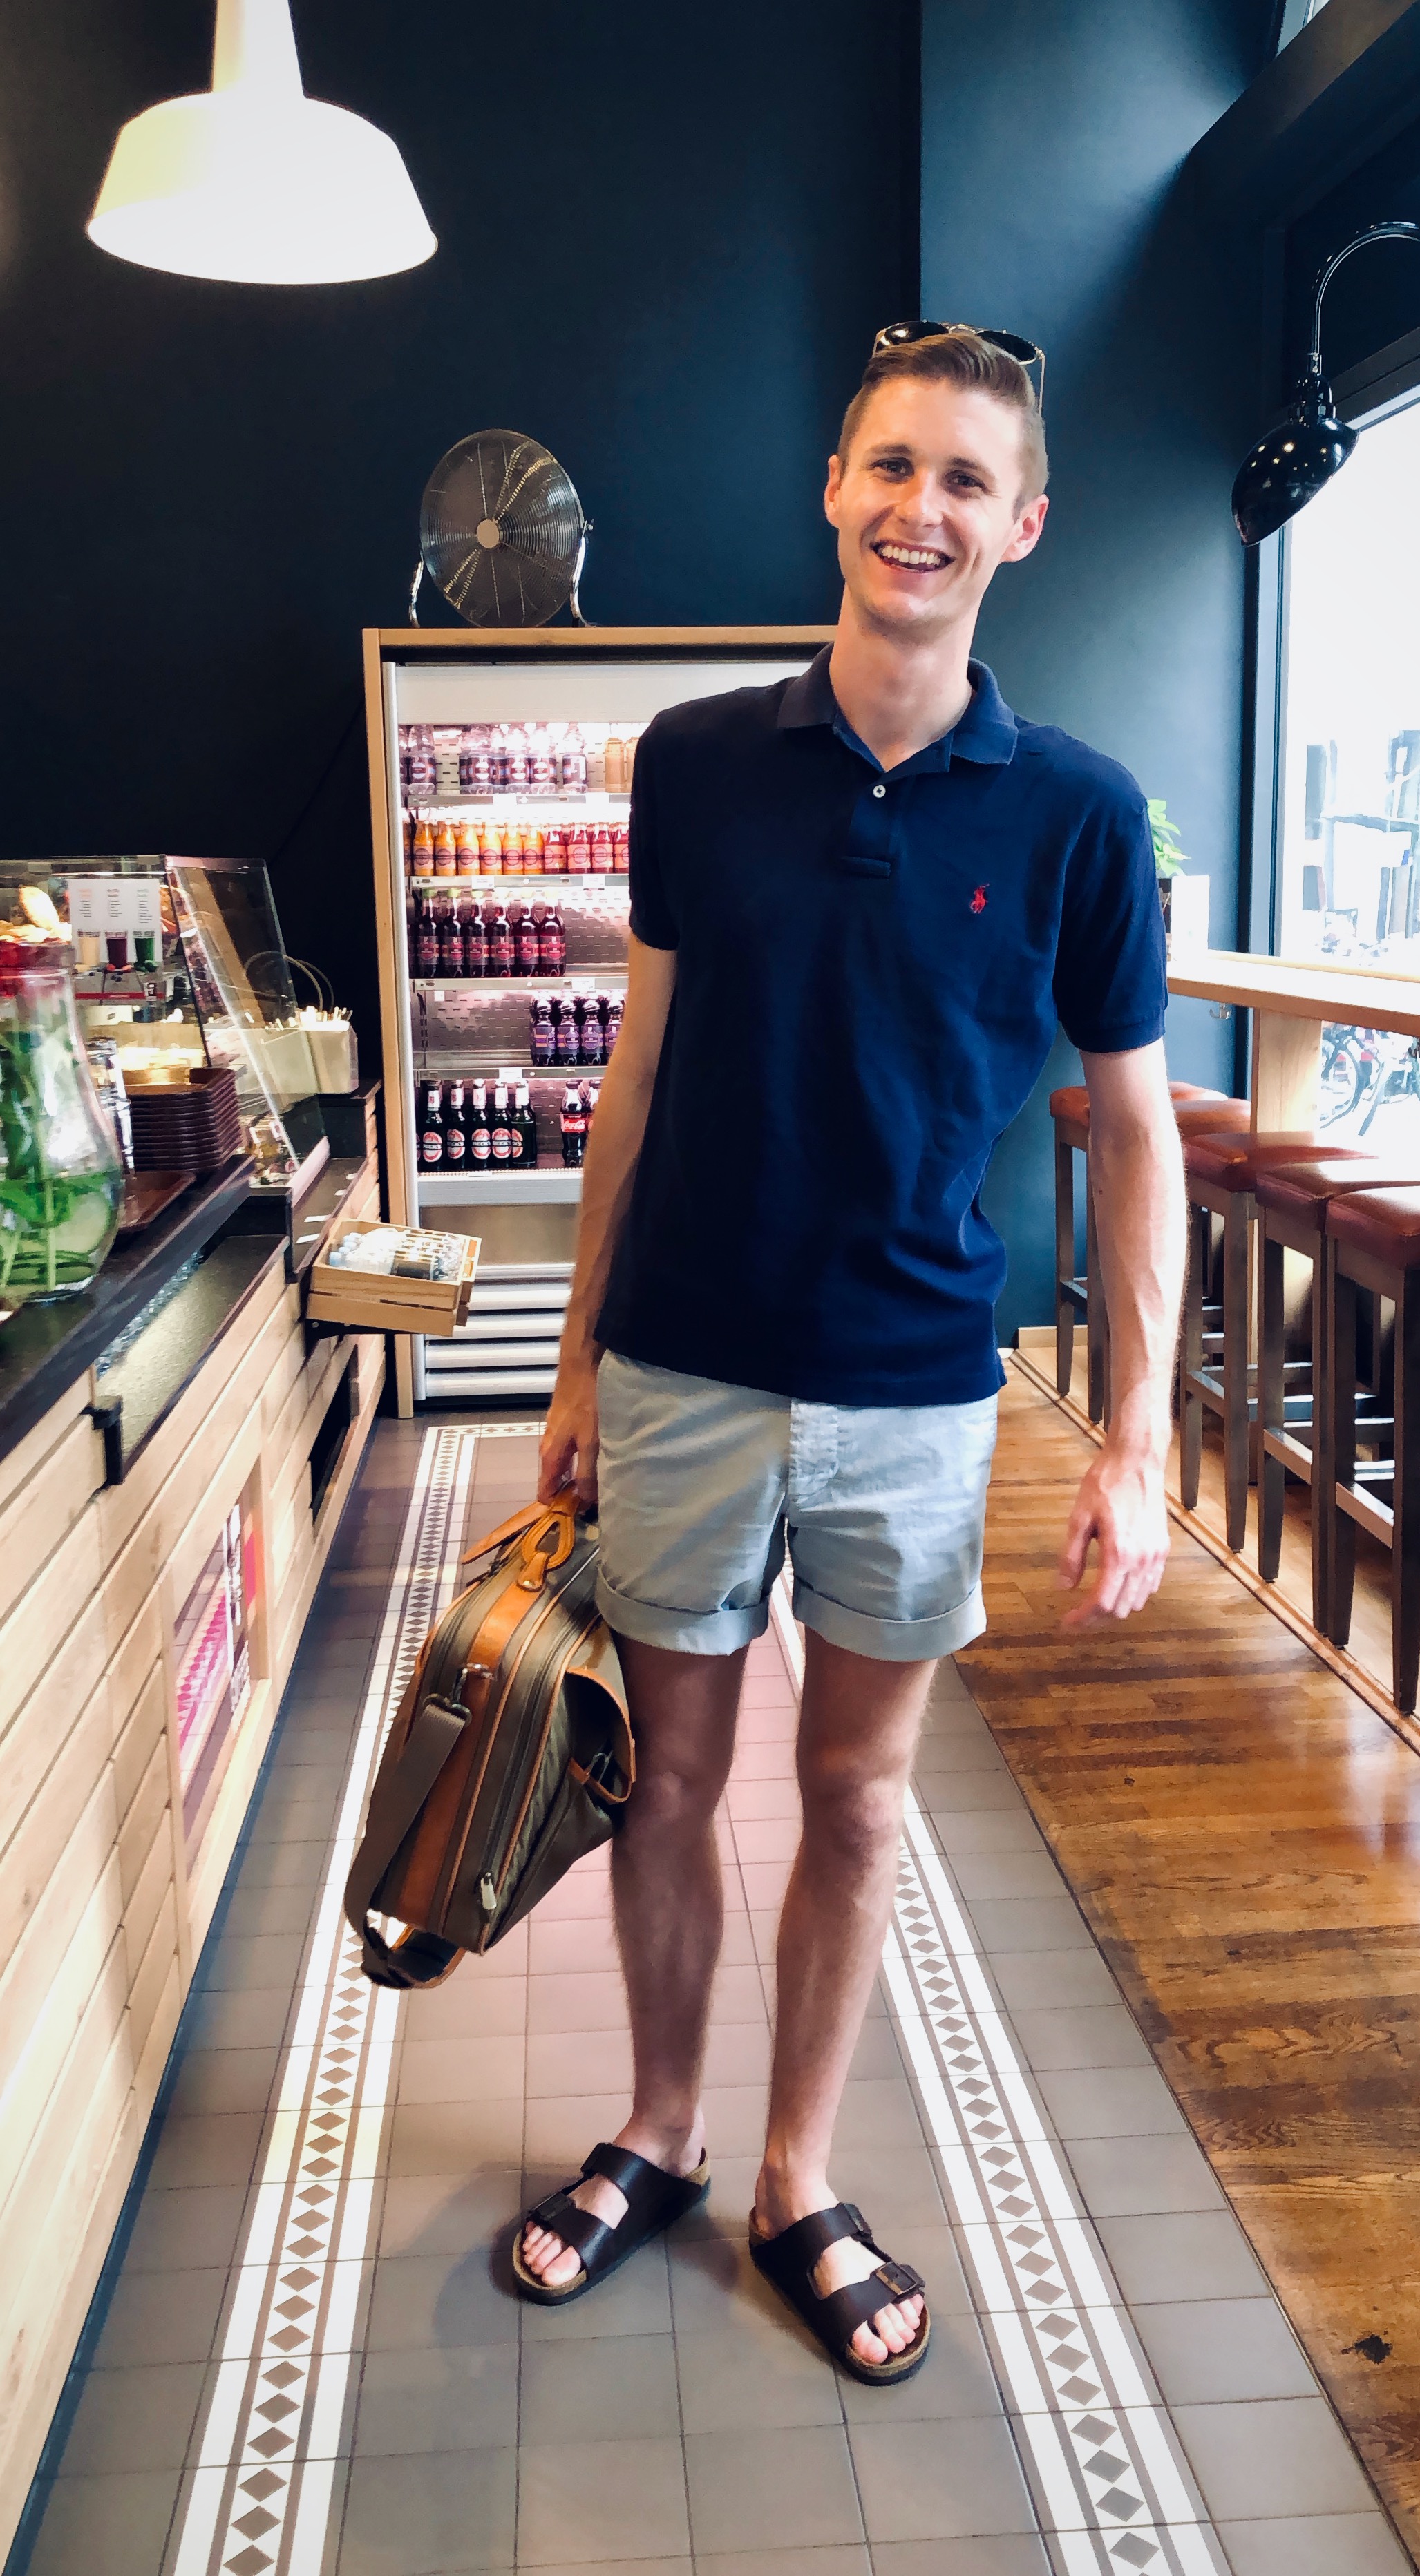  Evan Currie enjoys a bakery in Naumburg, Germany.  